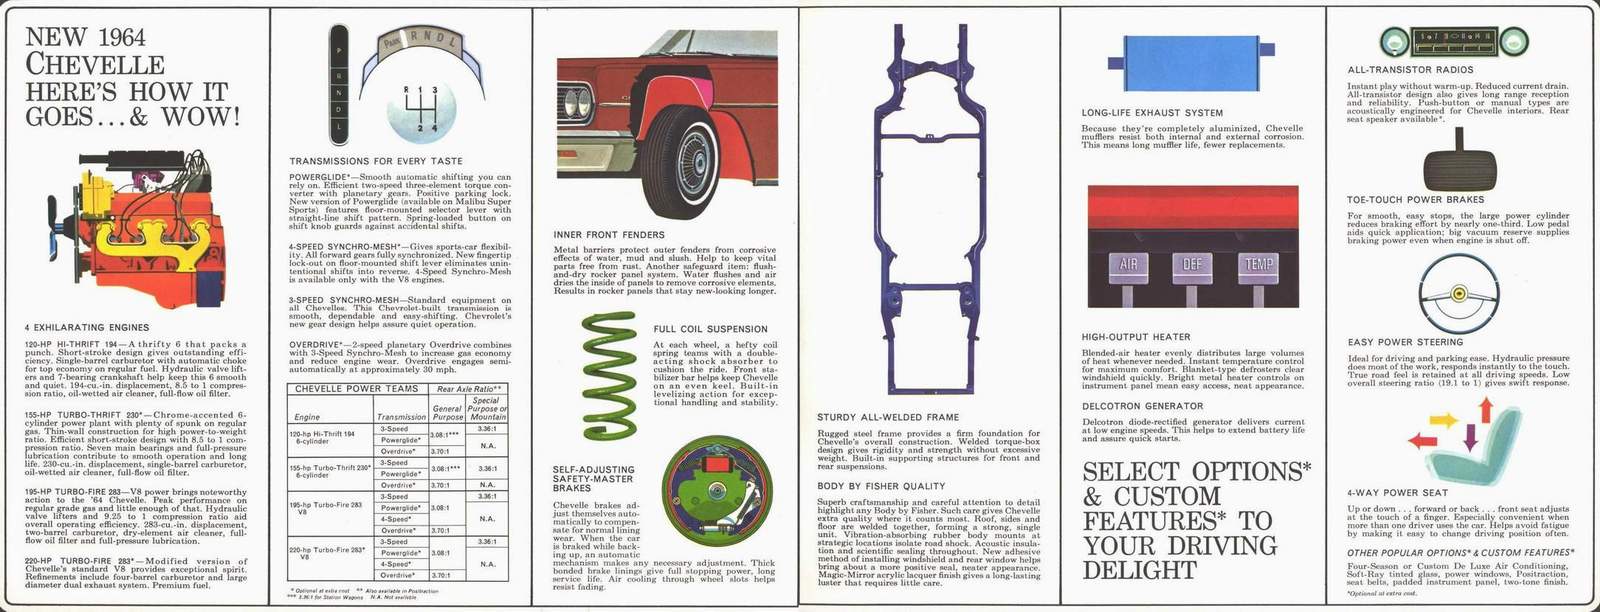 1964 Chev Chevelle Brochure Page 6